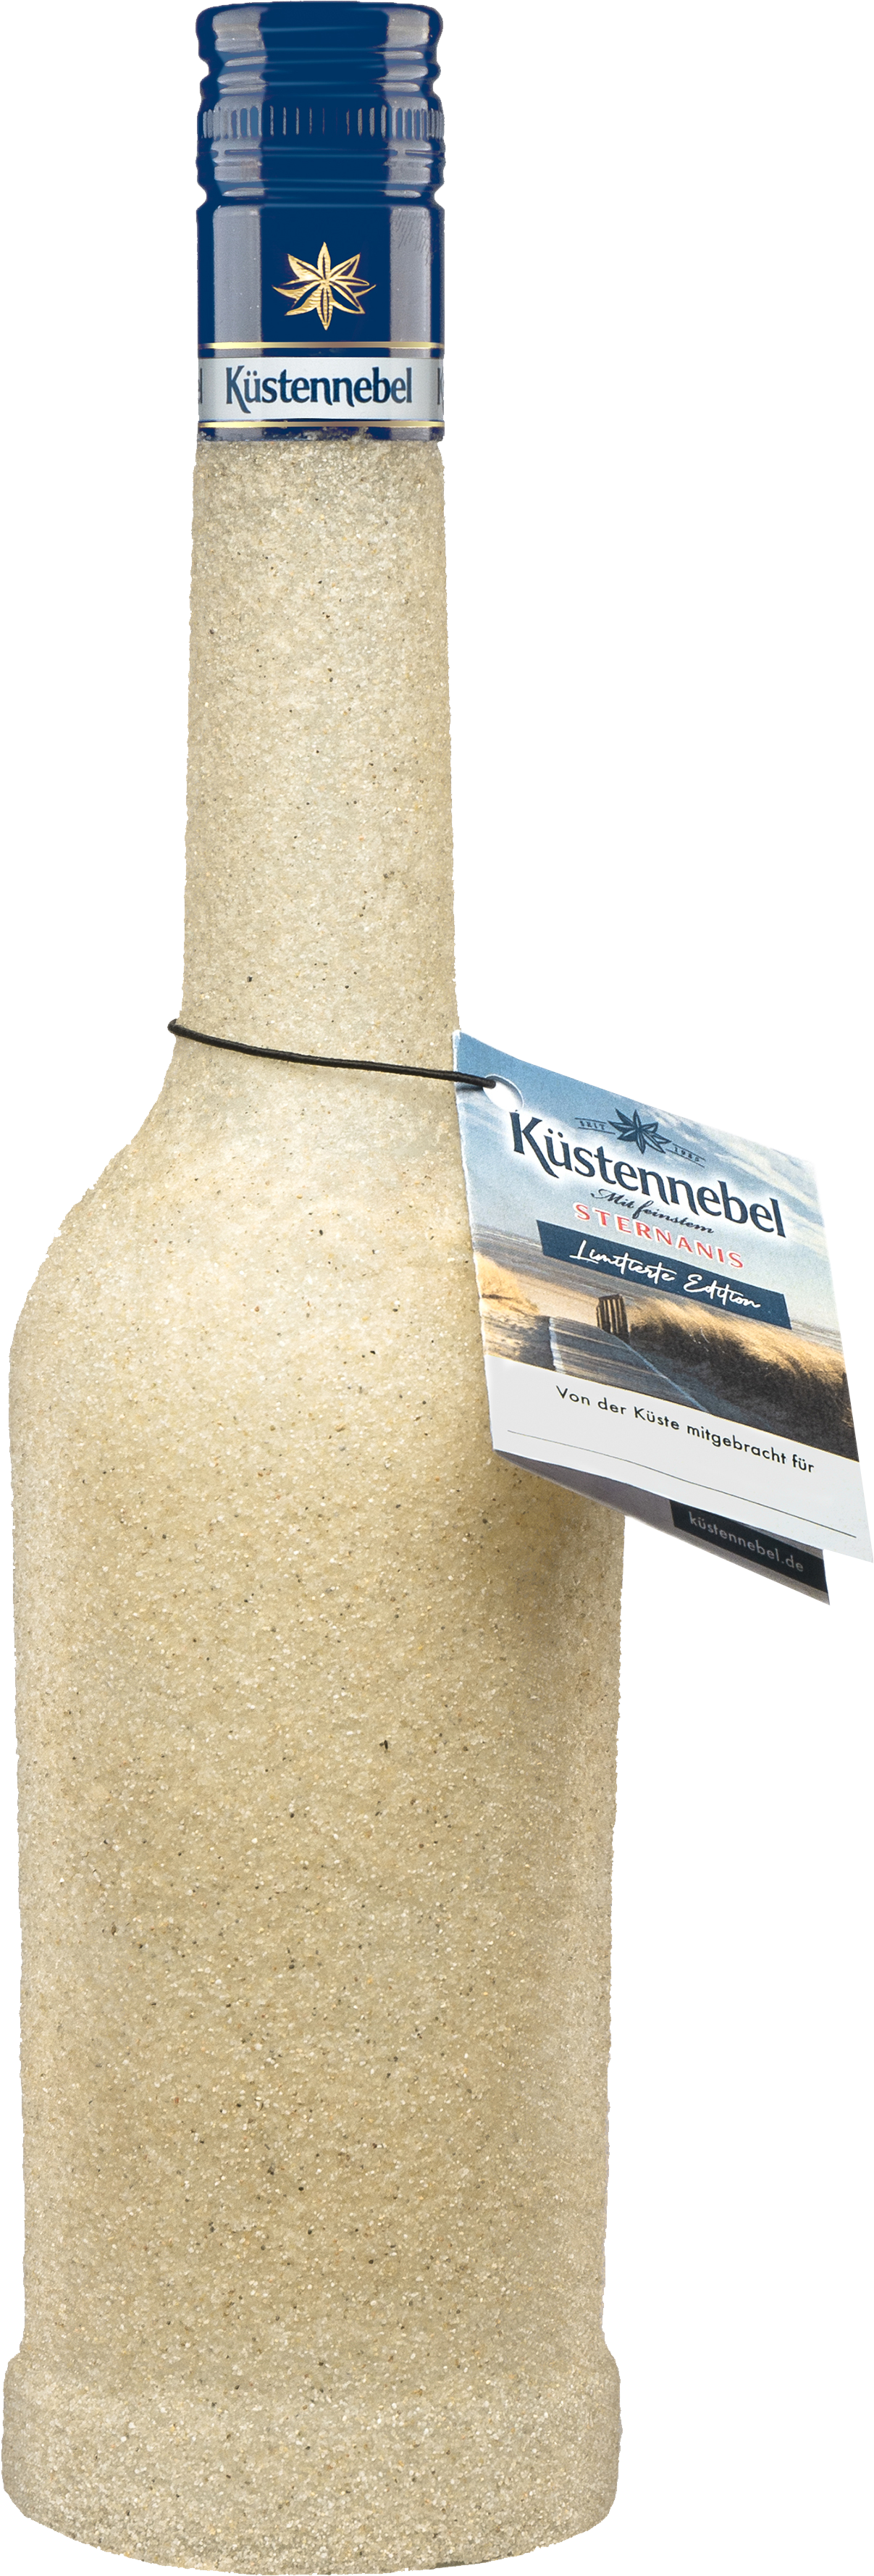 Küstennebel Sternanis Limited Edition Strandflasche 21,8% 0,5l